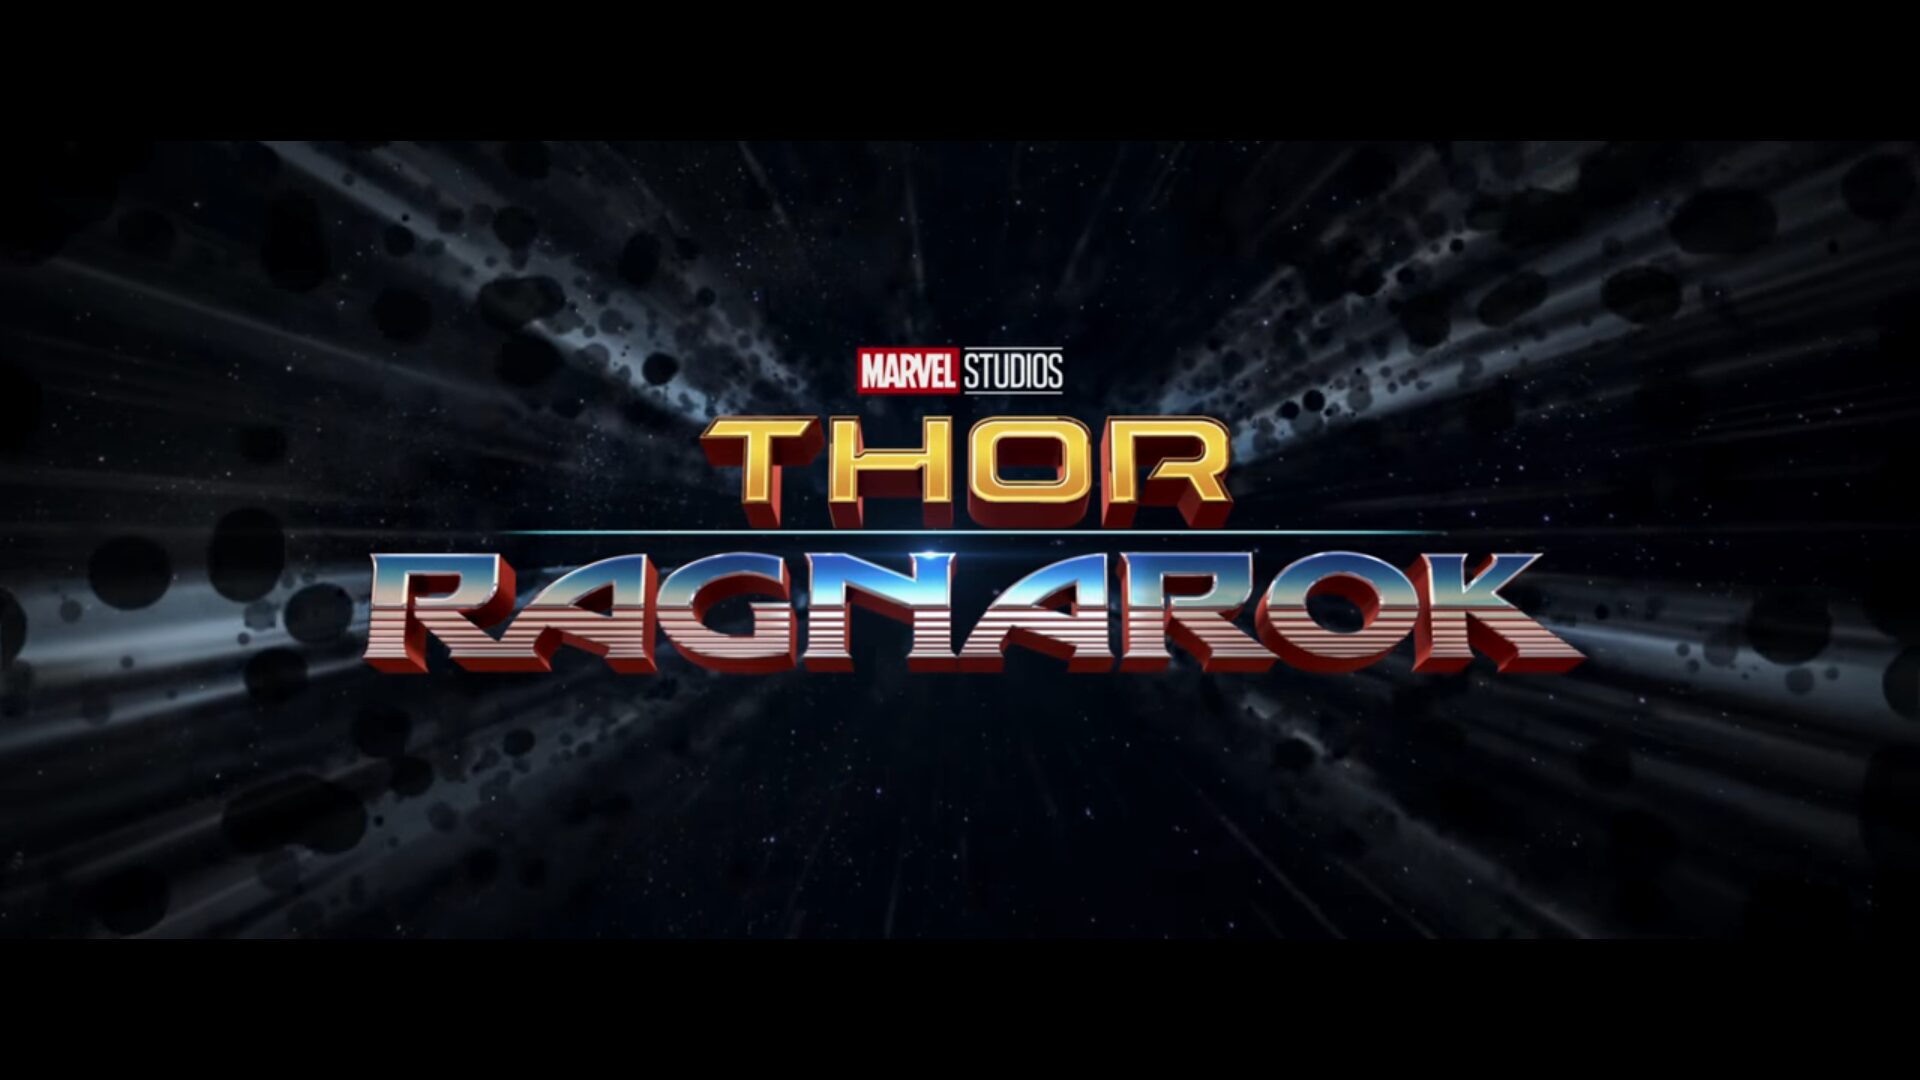 Mark Ruffalo Accidentally Streamed the First 10 Minutes of Thor: Ragnarok